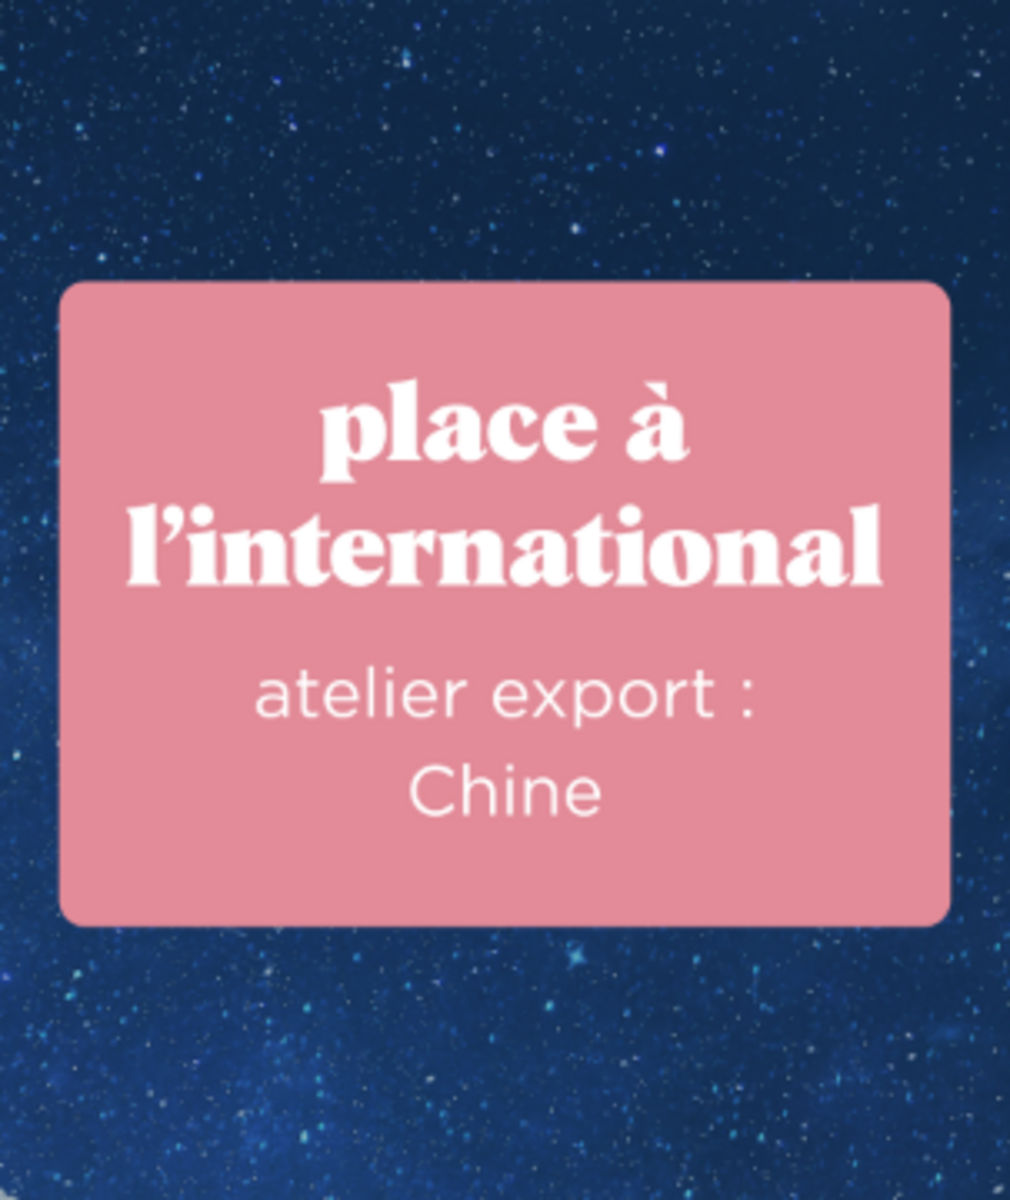 Atelier export : Chine